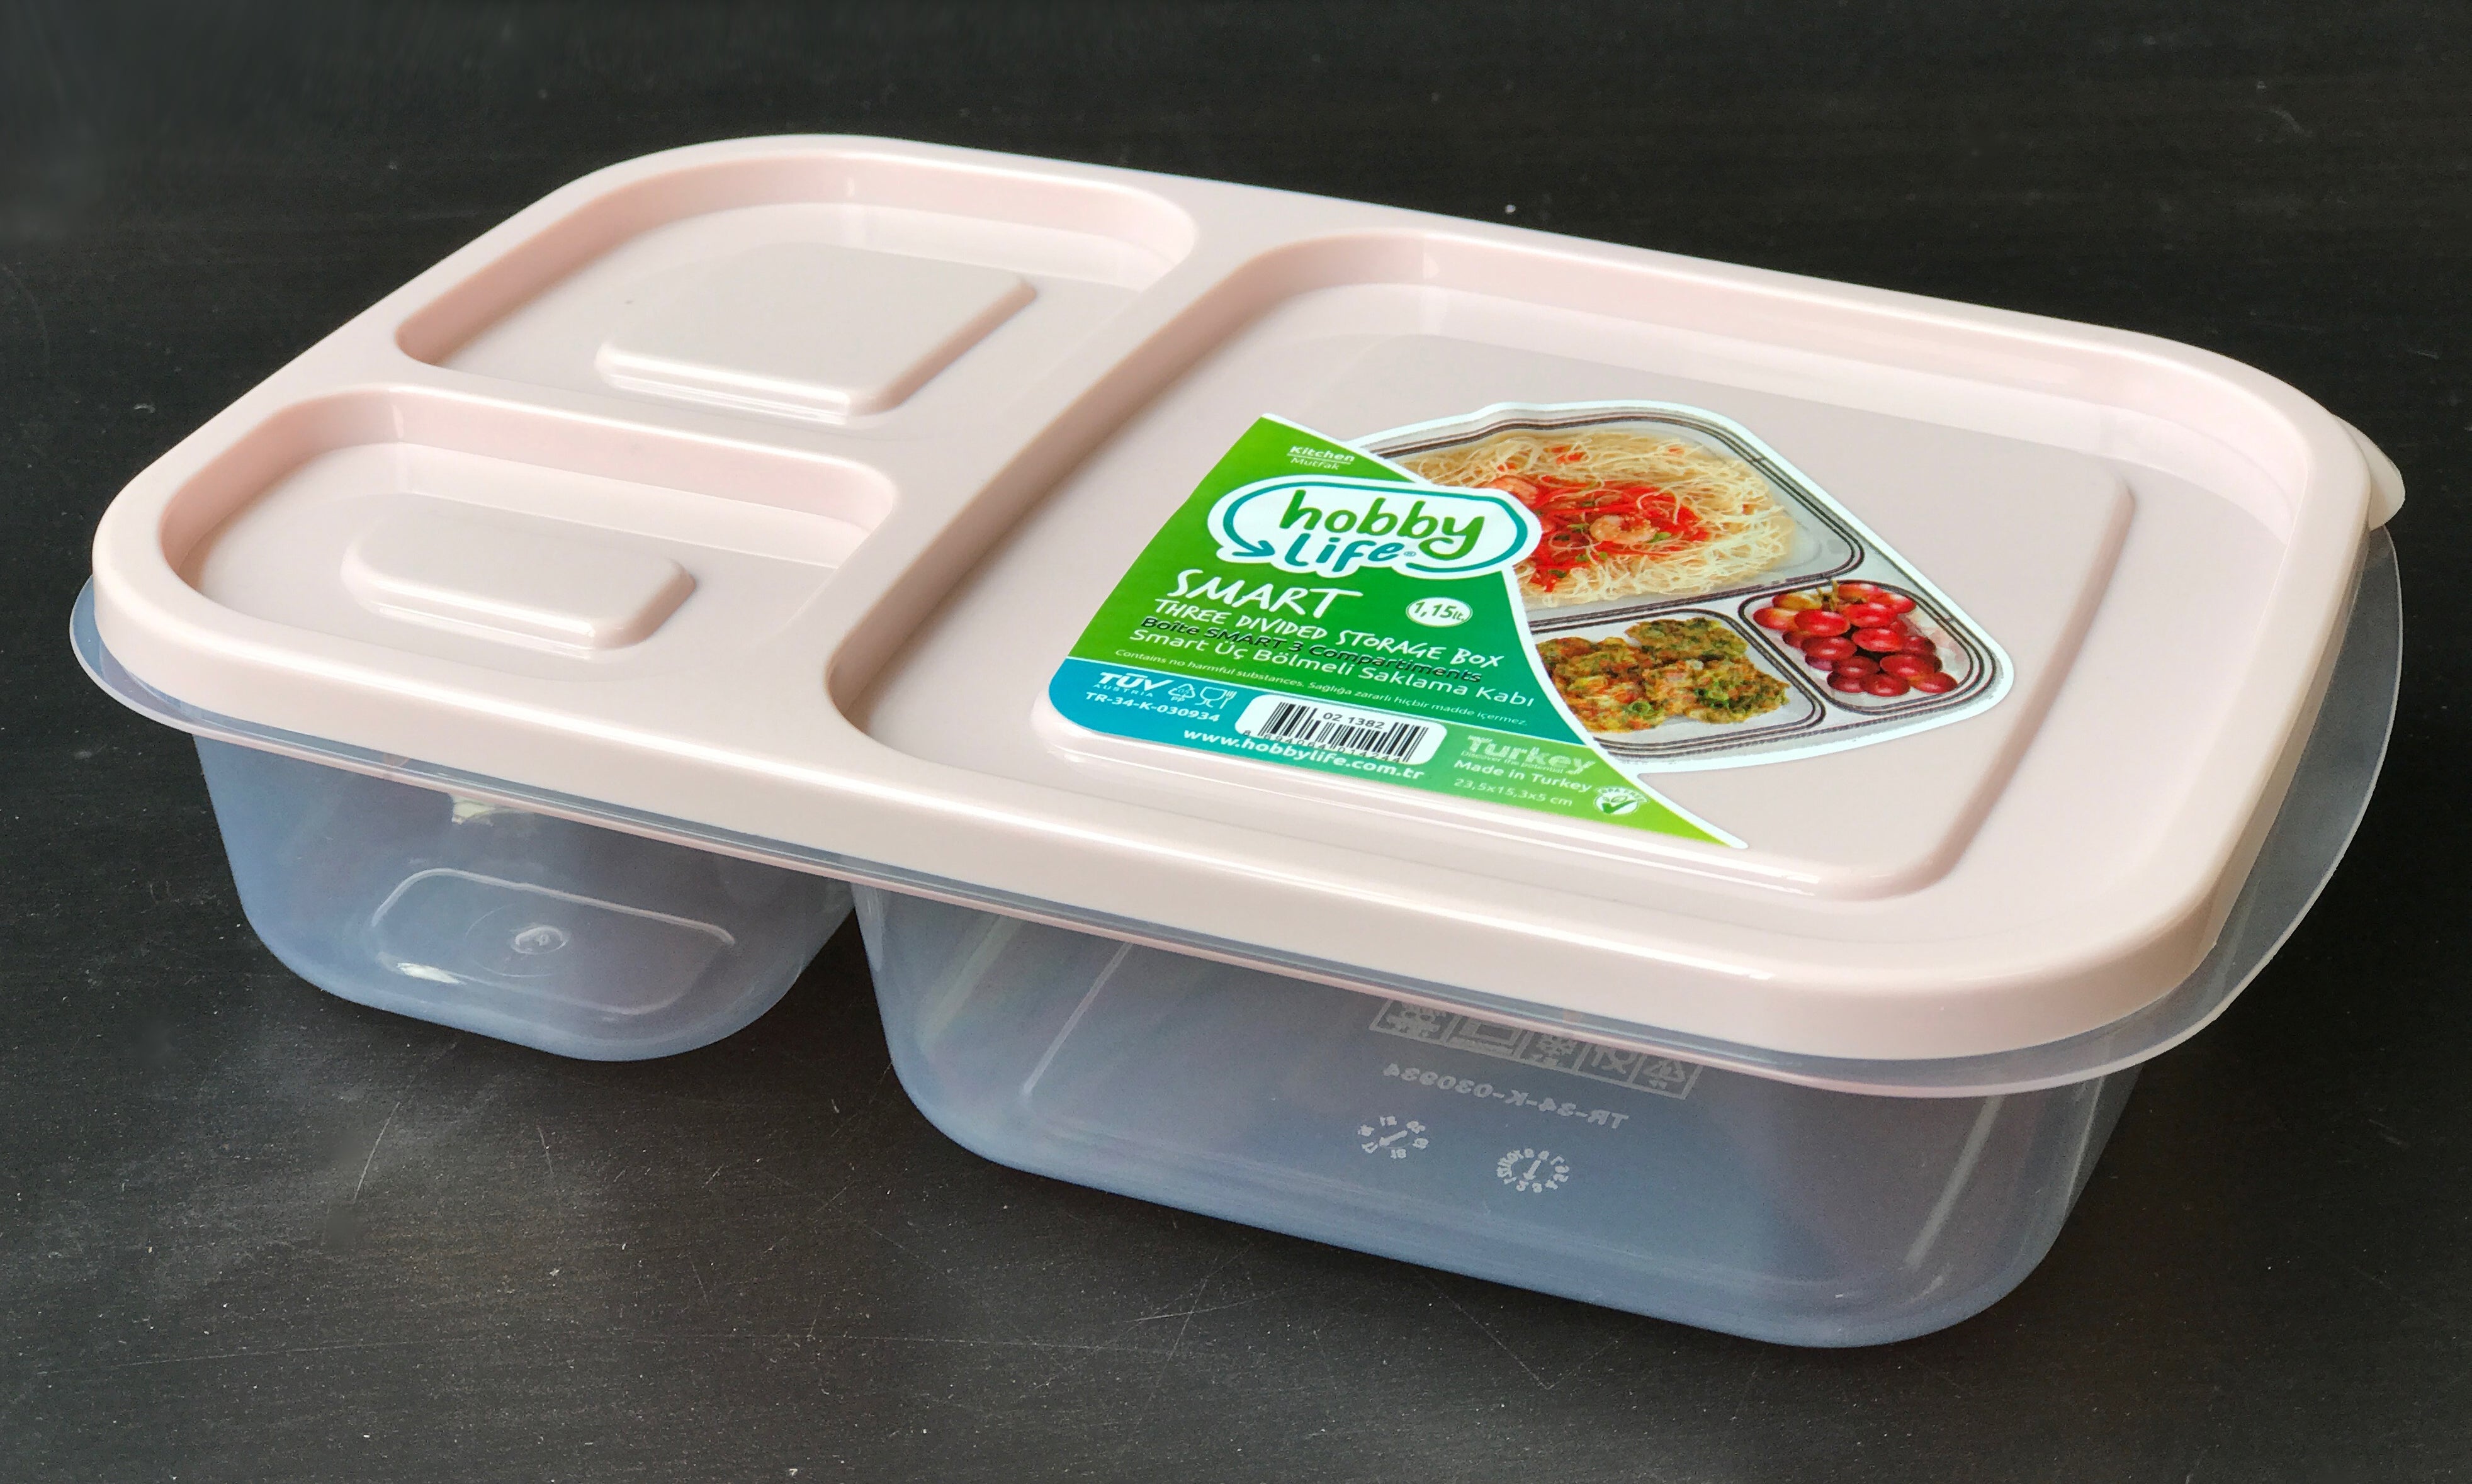 #W02-1383 Smart 3-Divided Food Storage Box 3 pcs Pack (case pack 12 pcs) 